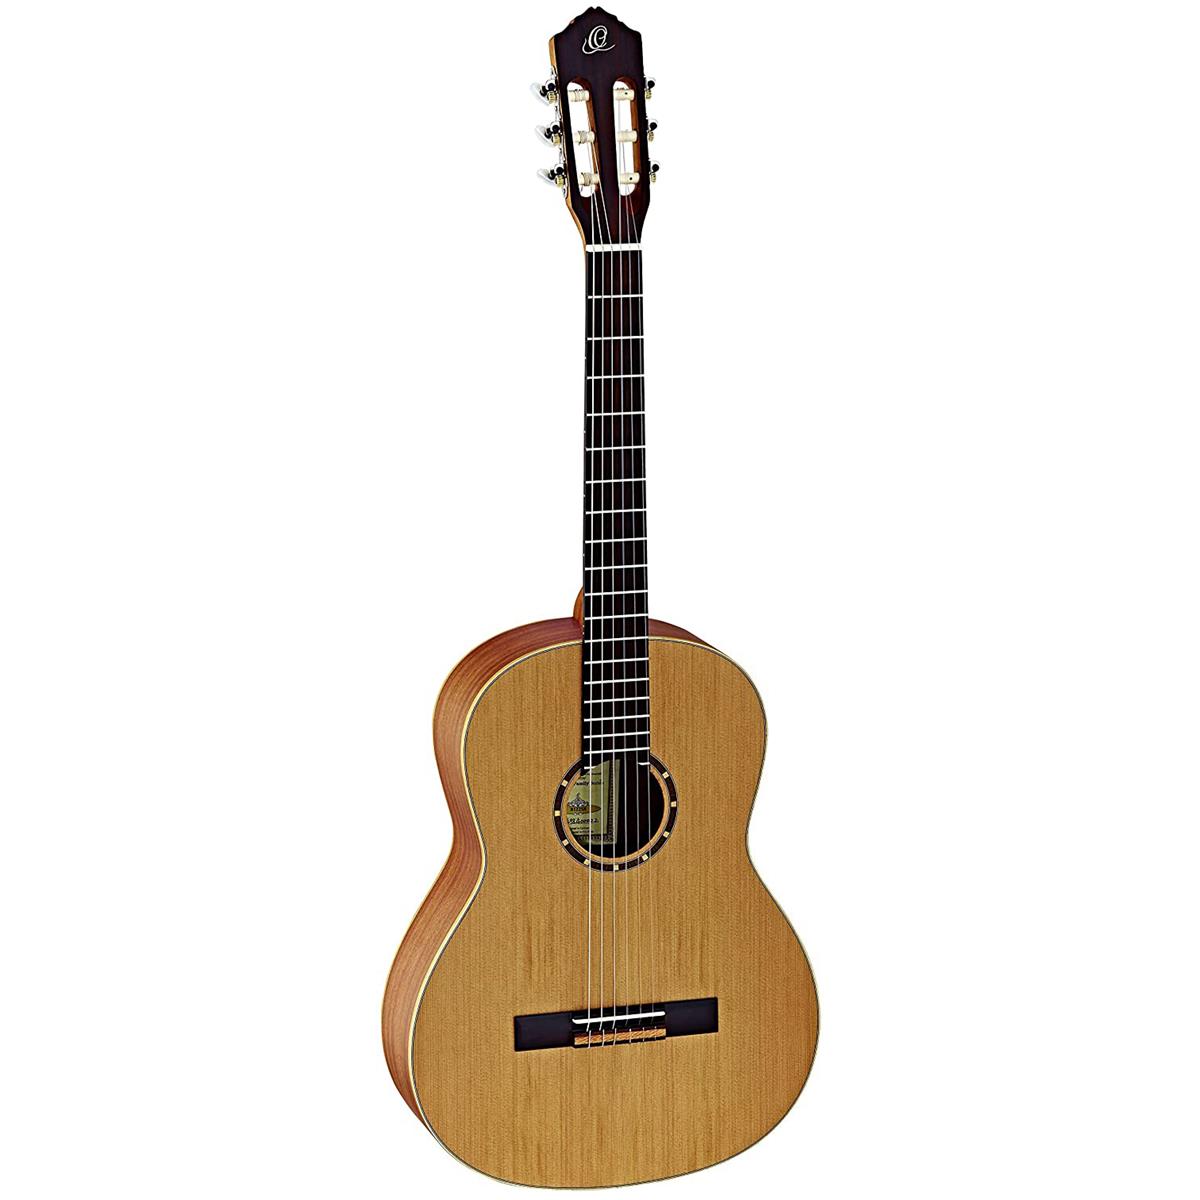 Image of Ortega Guitars R122 Family Series Cedar Top Slim Neck Acoustic Guitar